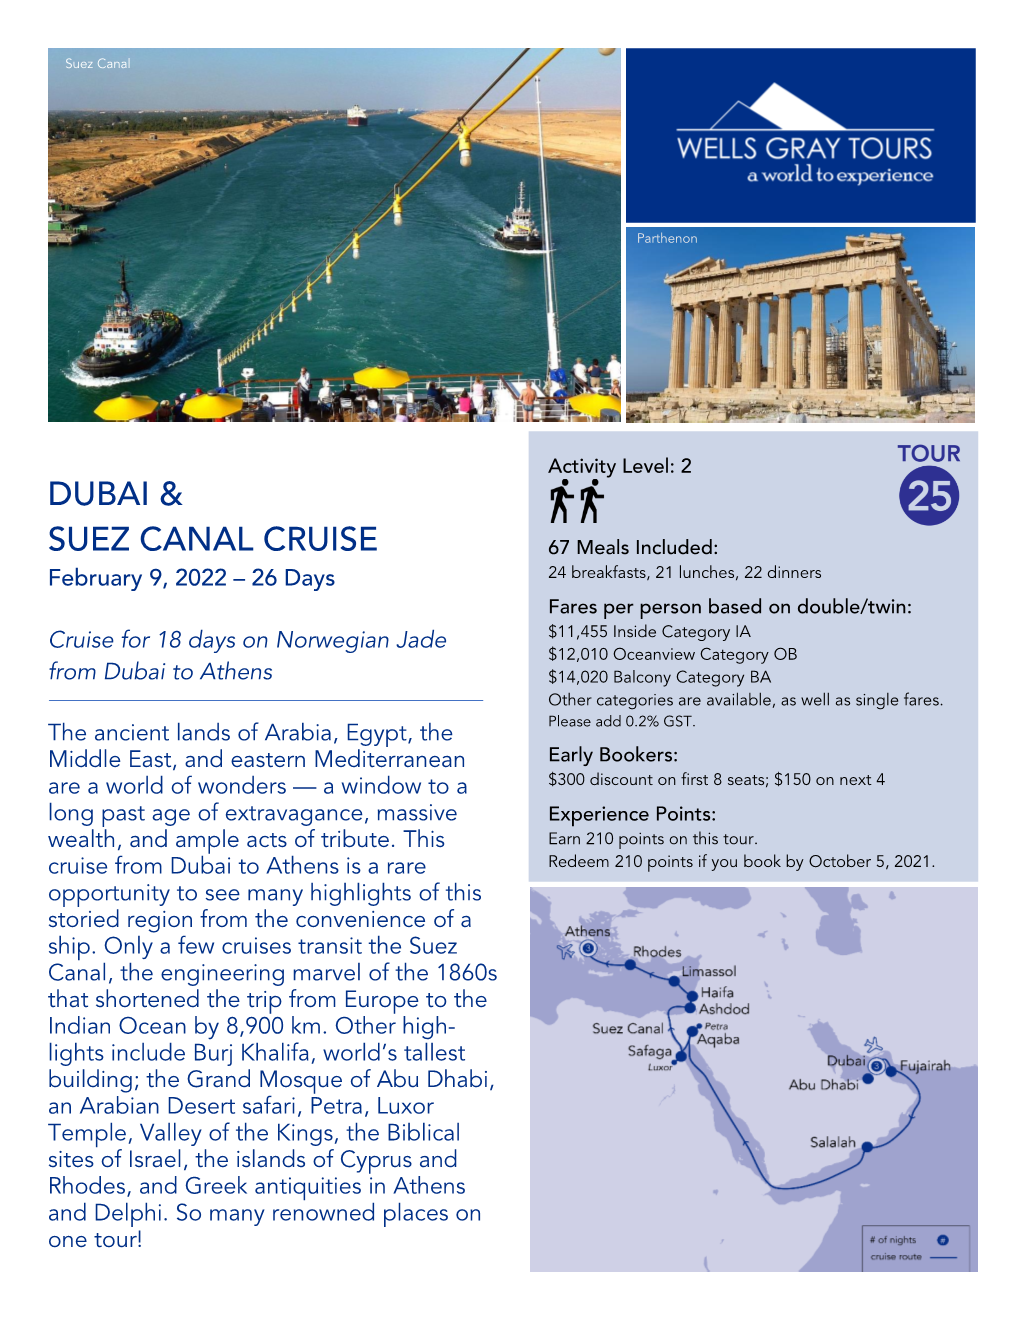 Dubai & Suez Canal Cruise